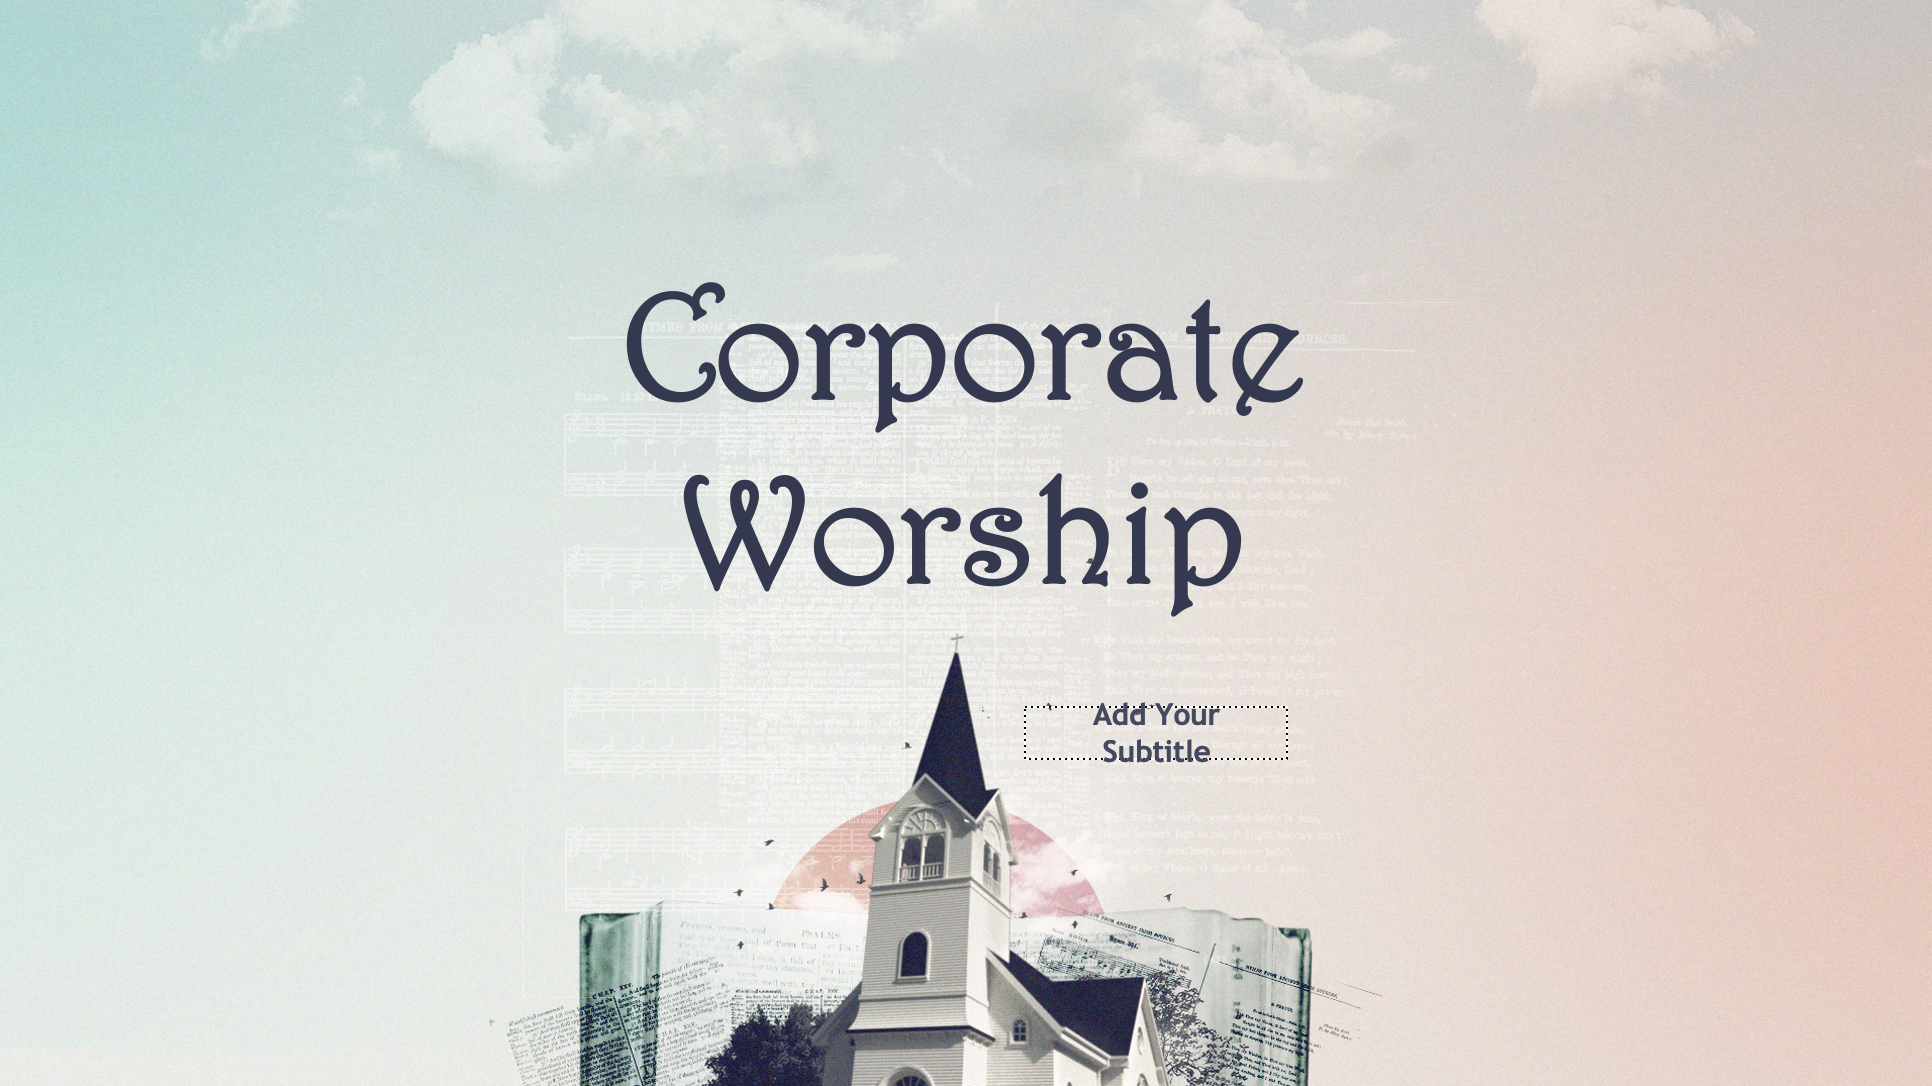 Corporate Worship banner